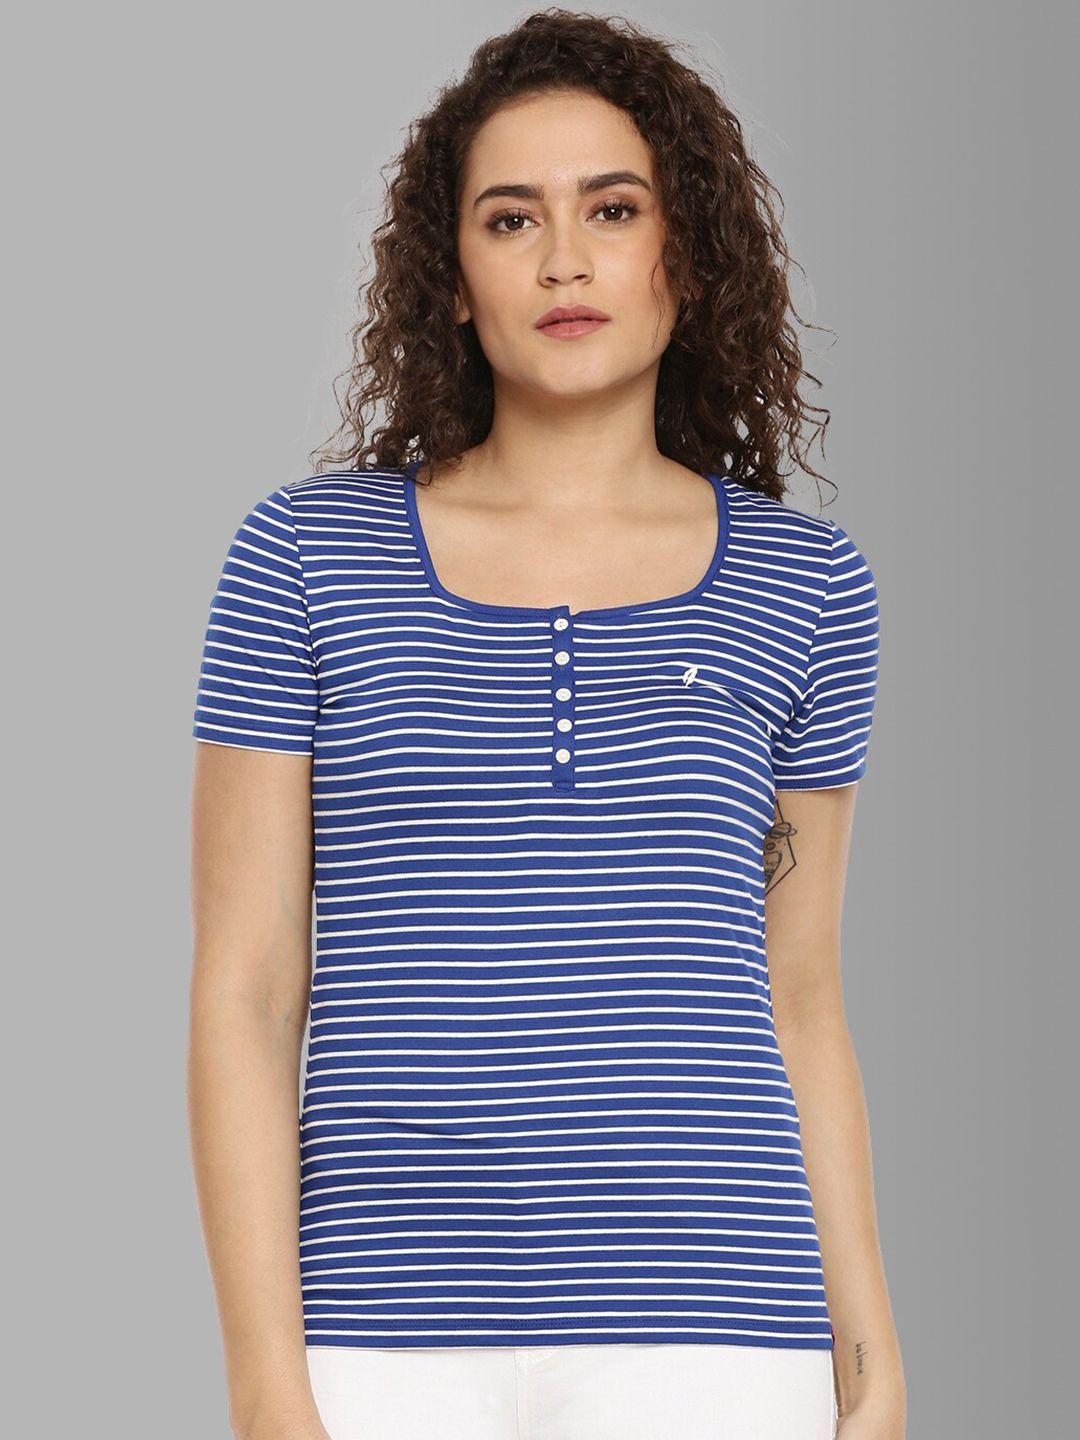 feather soft elite women blue & white striped slim fit running t-shirt